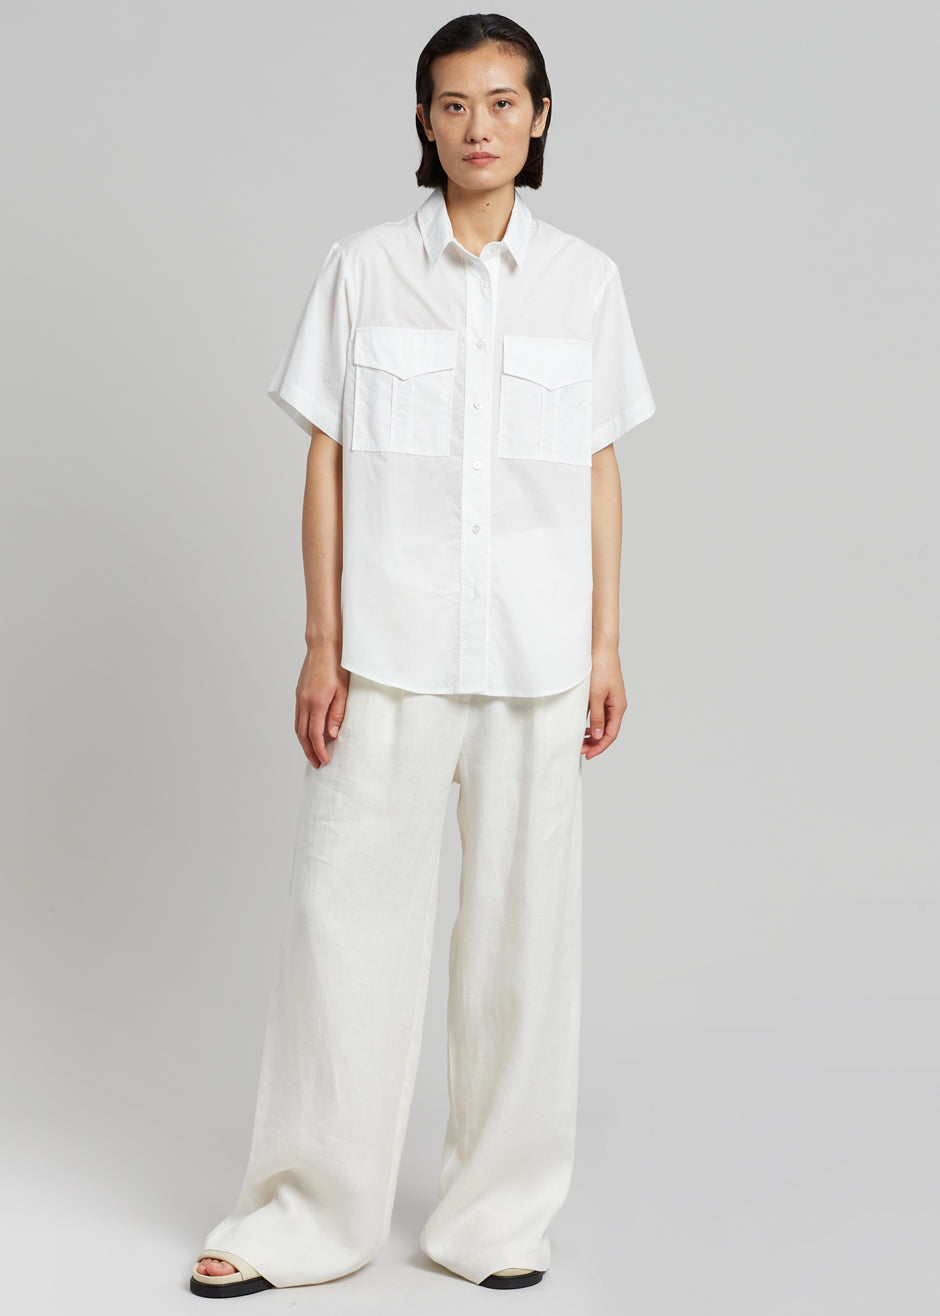 MATIN Short Sleeve Pocket Shirt - White